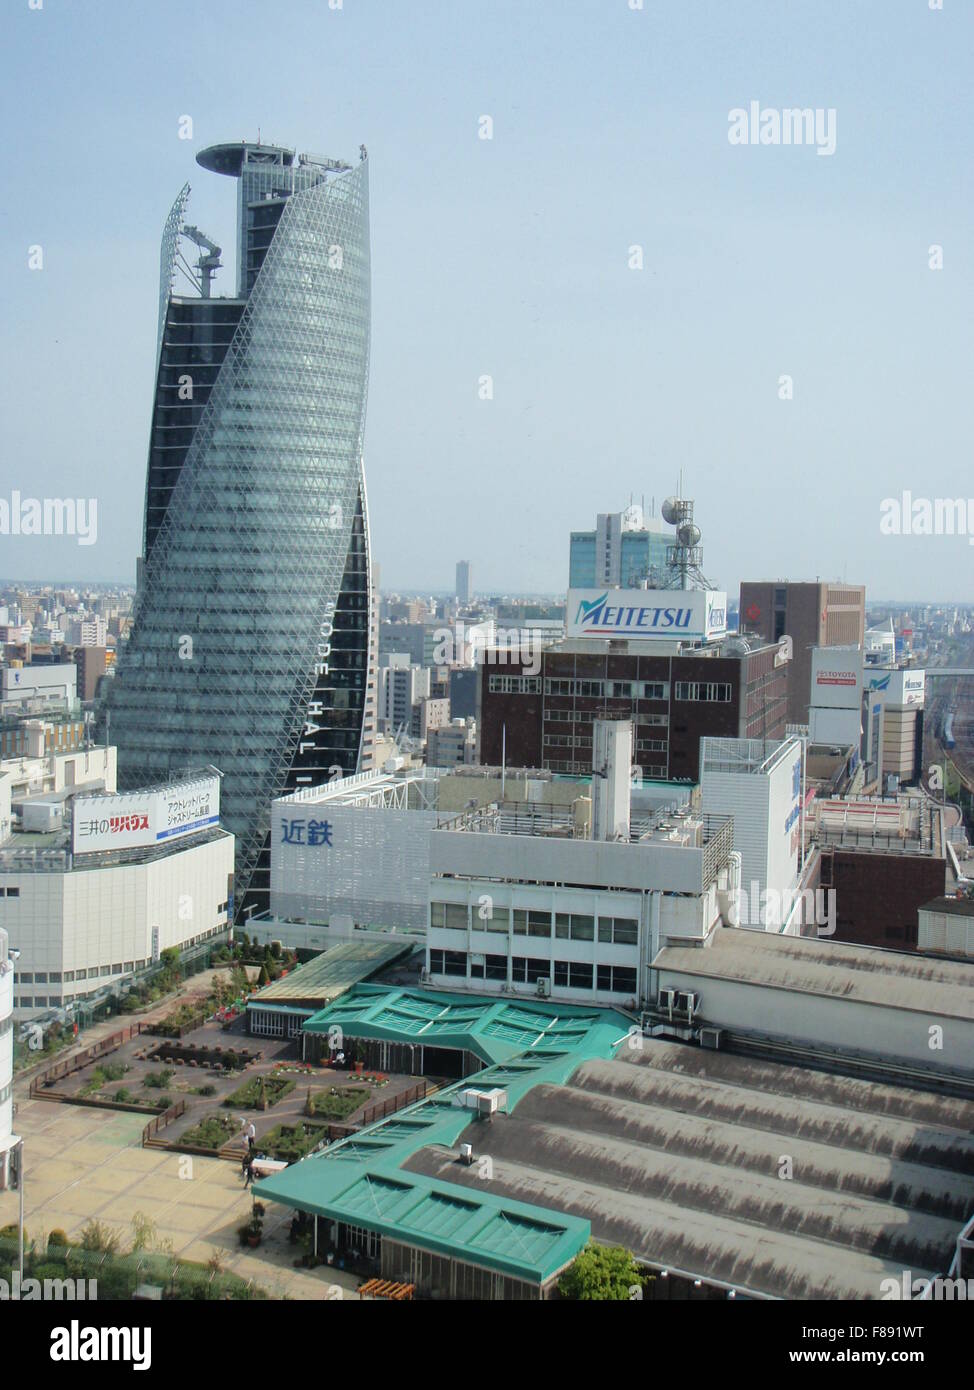 The scenery of Nagoya Stock Photo